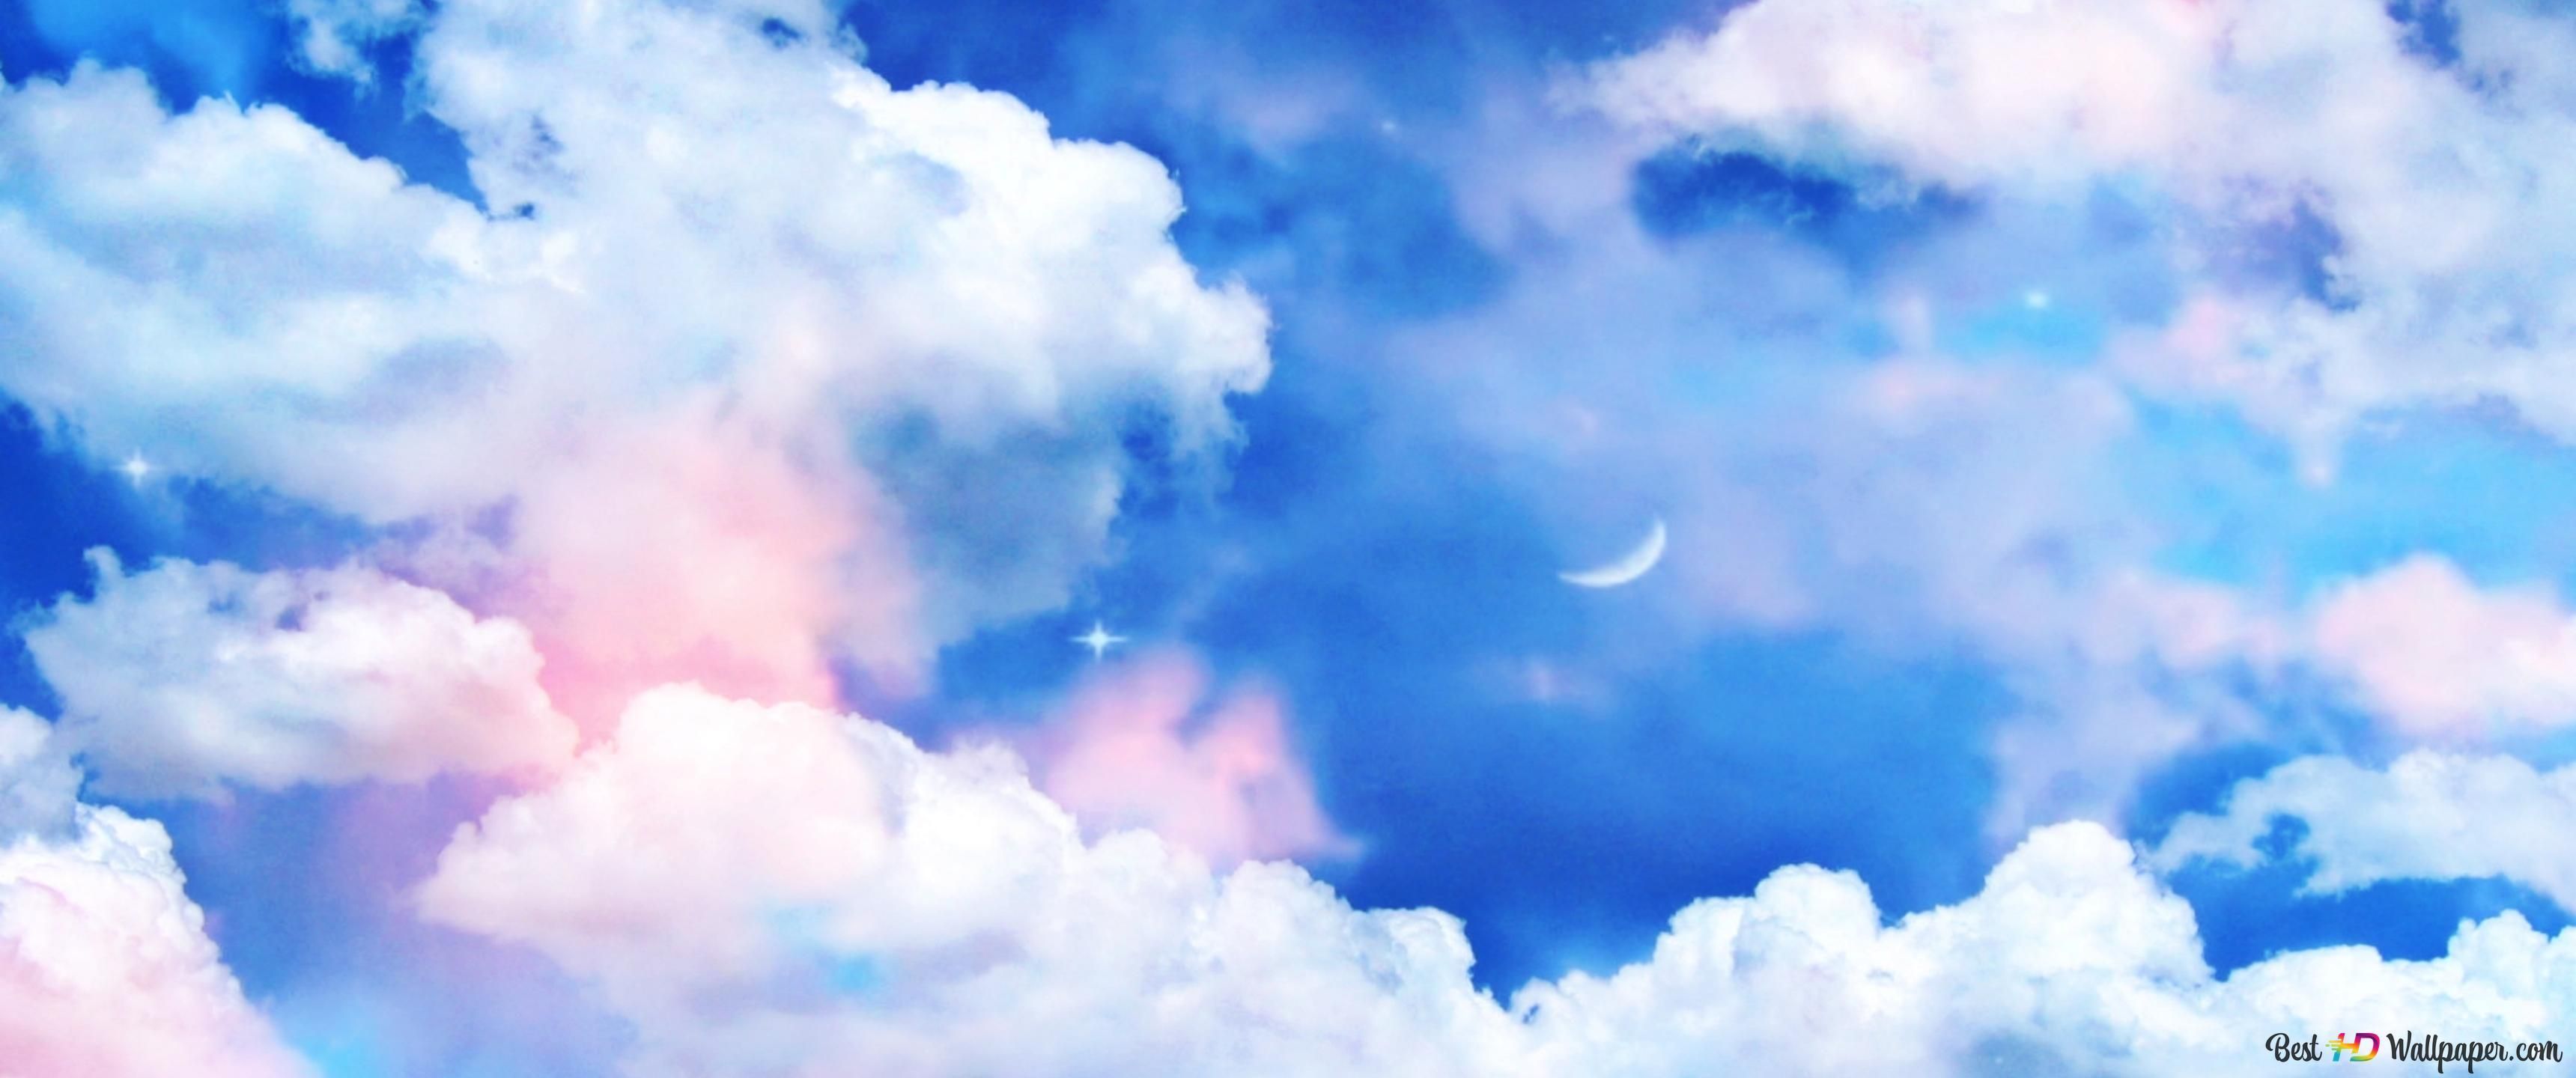 Cloudy night aesthetic 4K wallpaper download